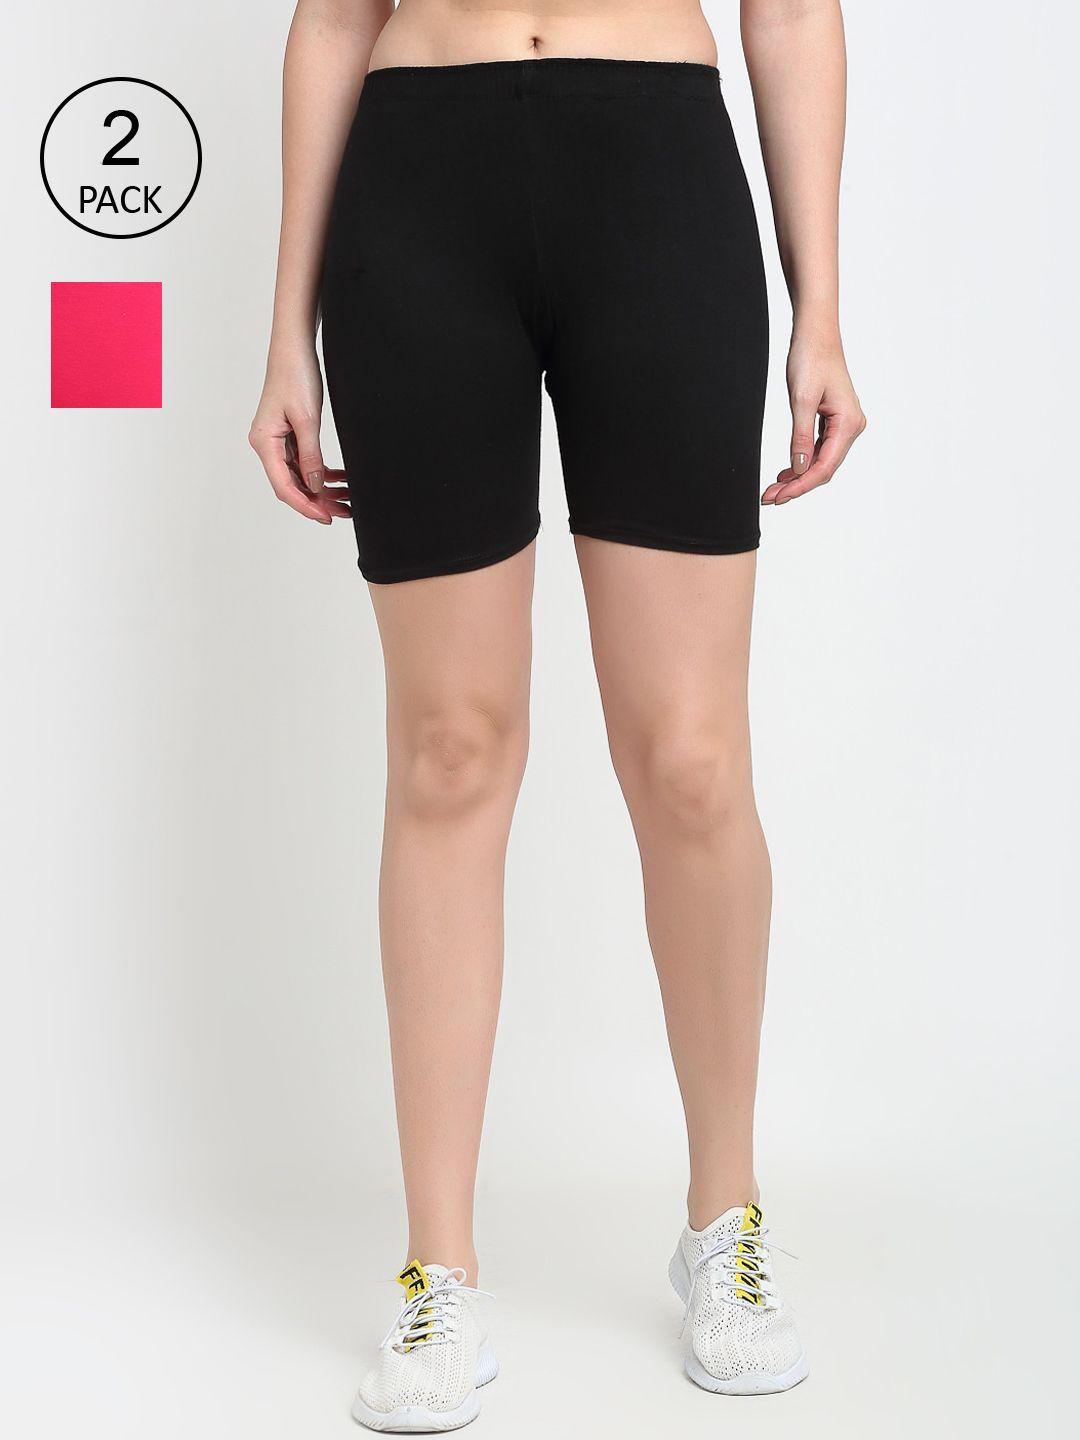 gracit women black & pink set of 2 biker shorts